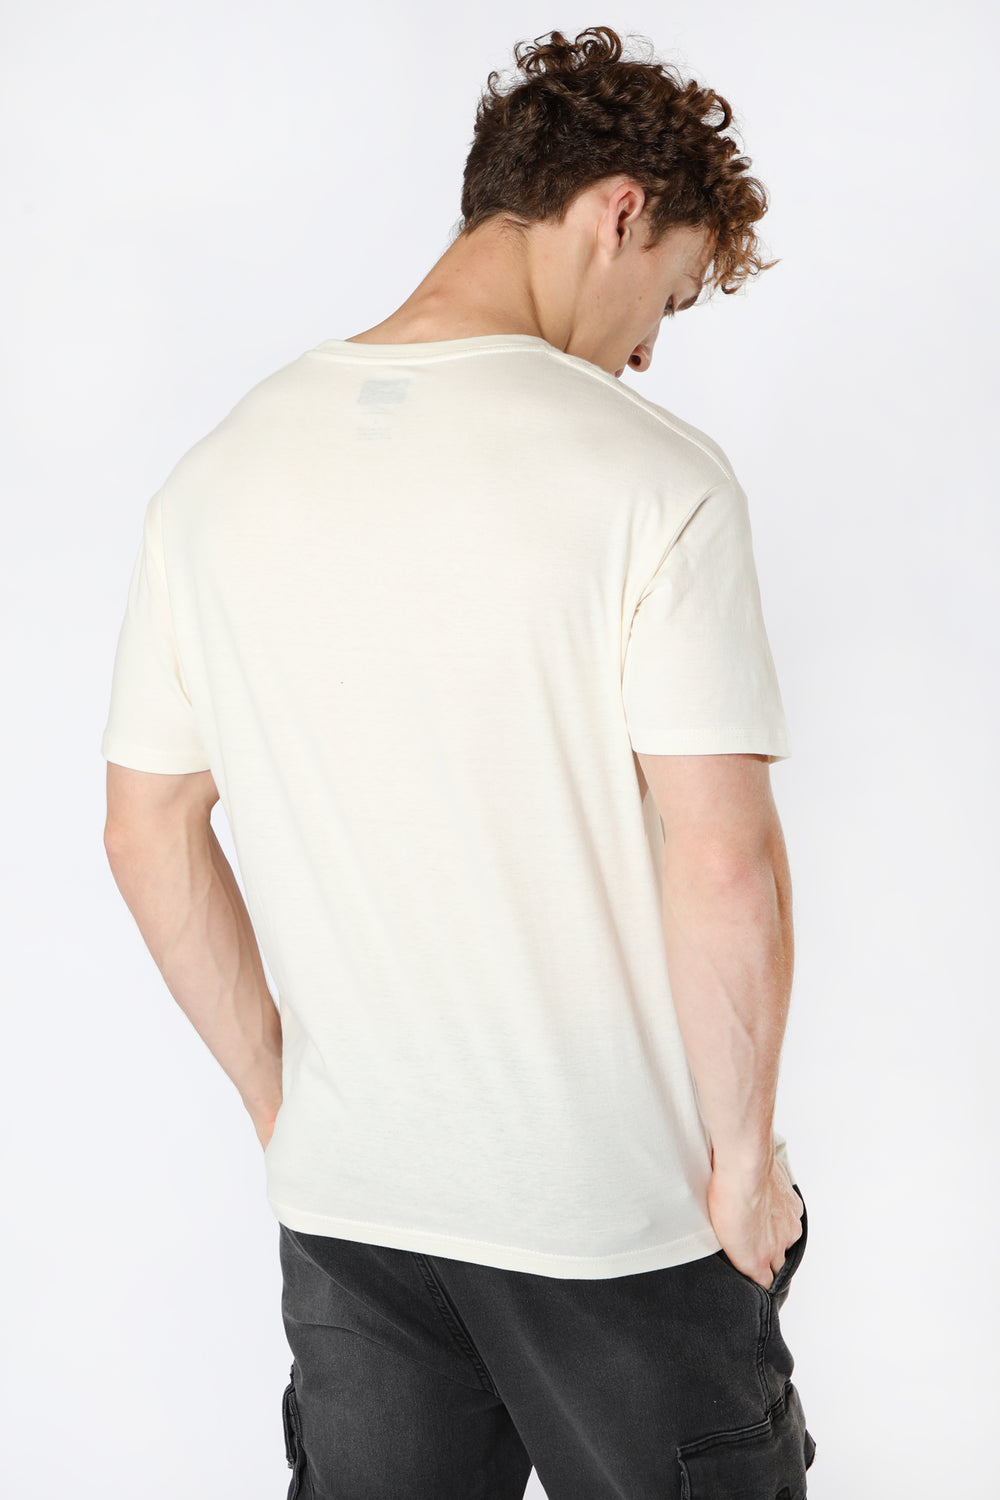 T-Shirt Unisexe Imprimé Grand Logo Zoo York Skateboarding Blanc casse